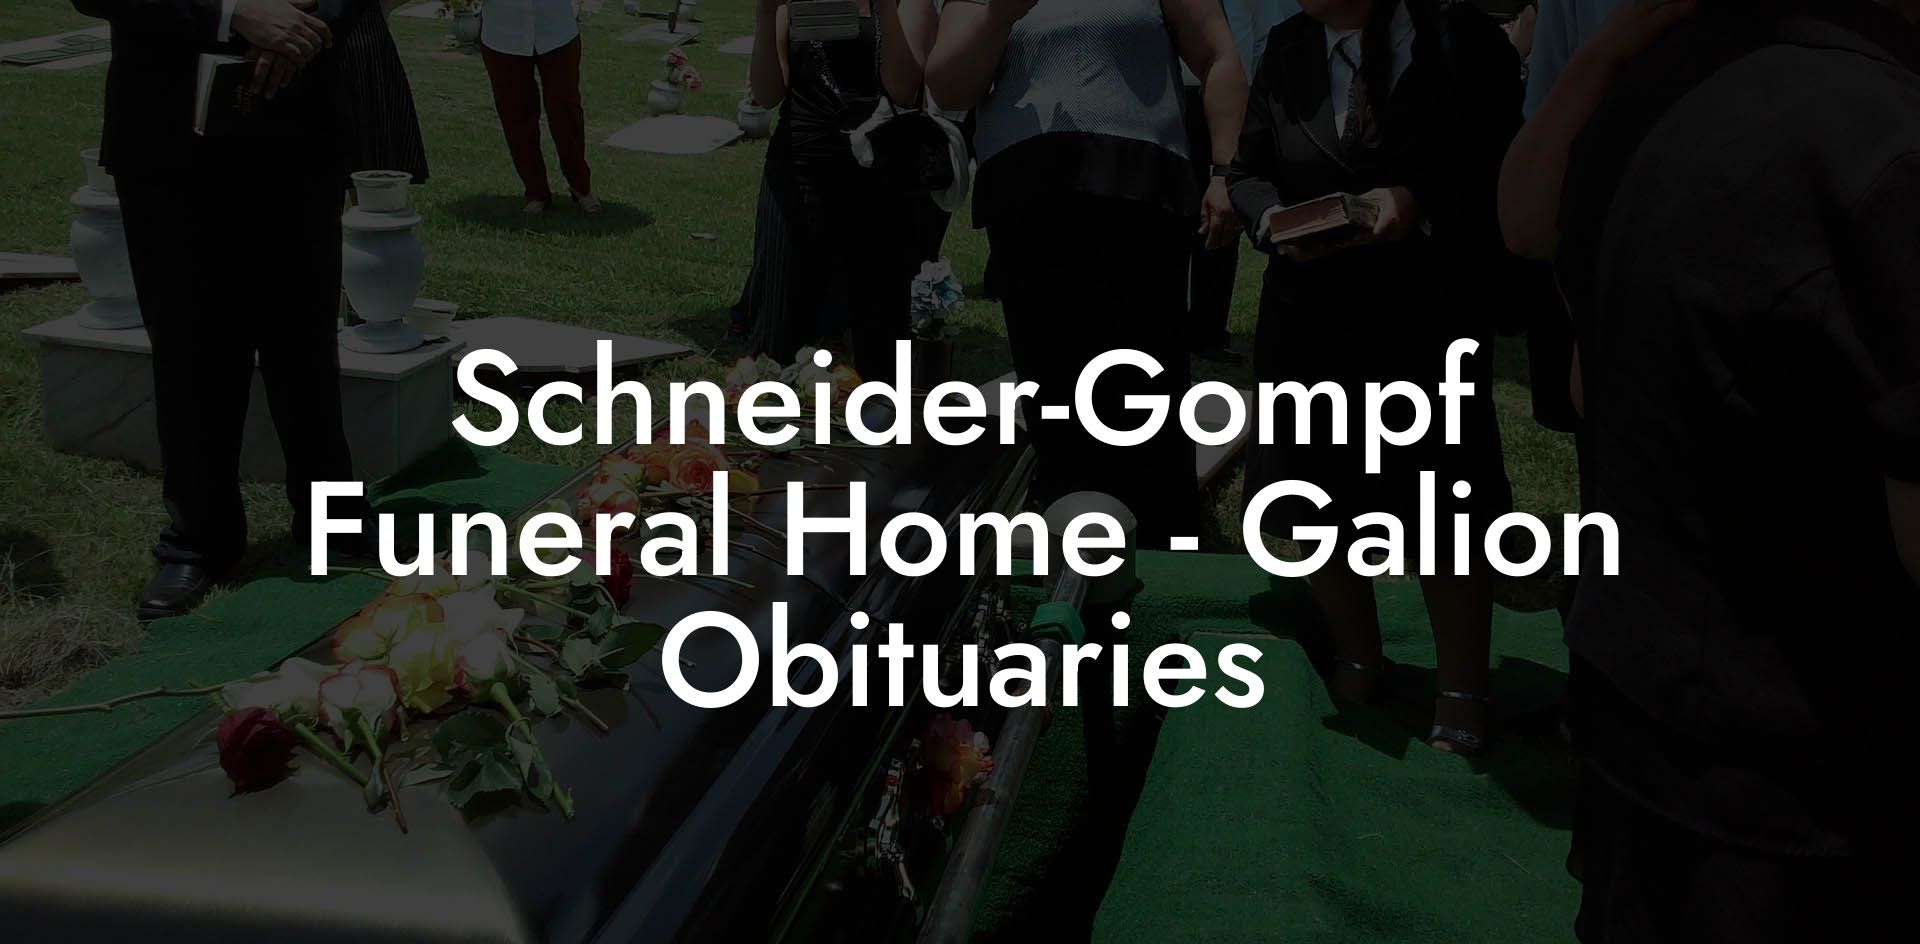 Schneider-Gompf Funeral Home - Galion Obituaries